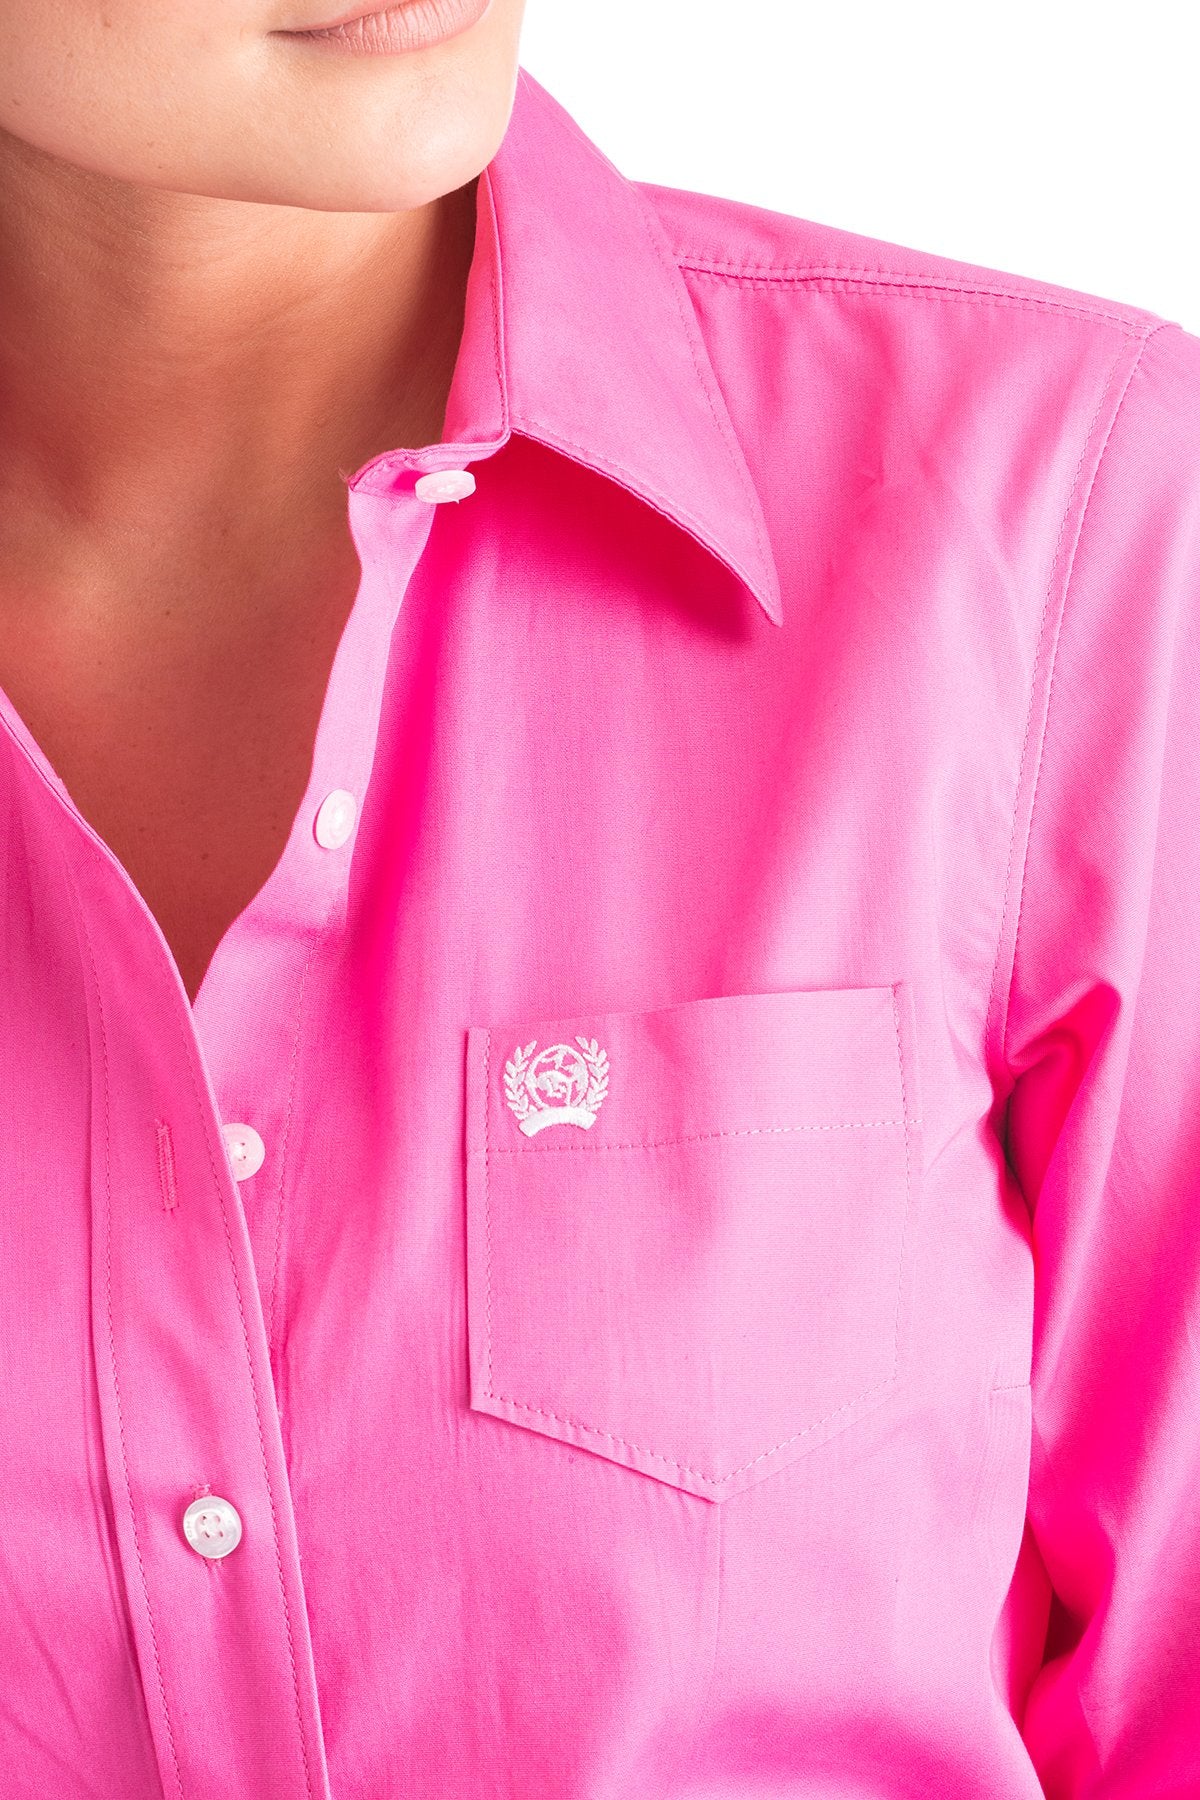 Cinch Solid Hot Pink Shirt - Frontier Western Shop